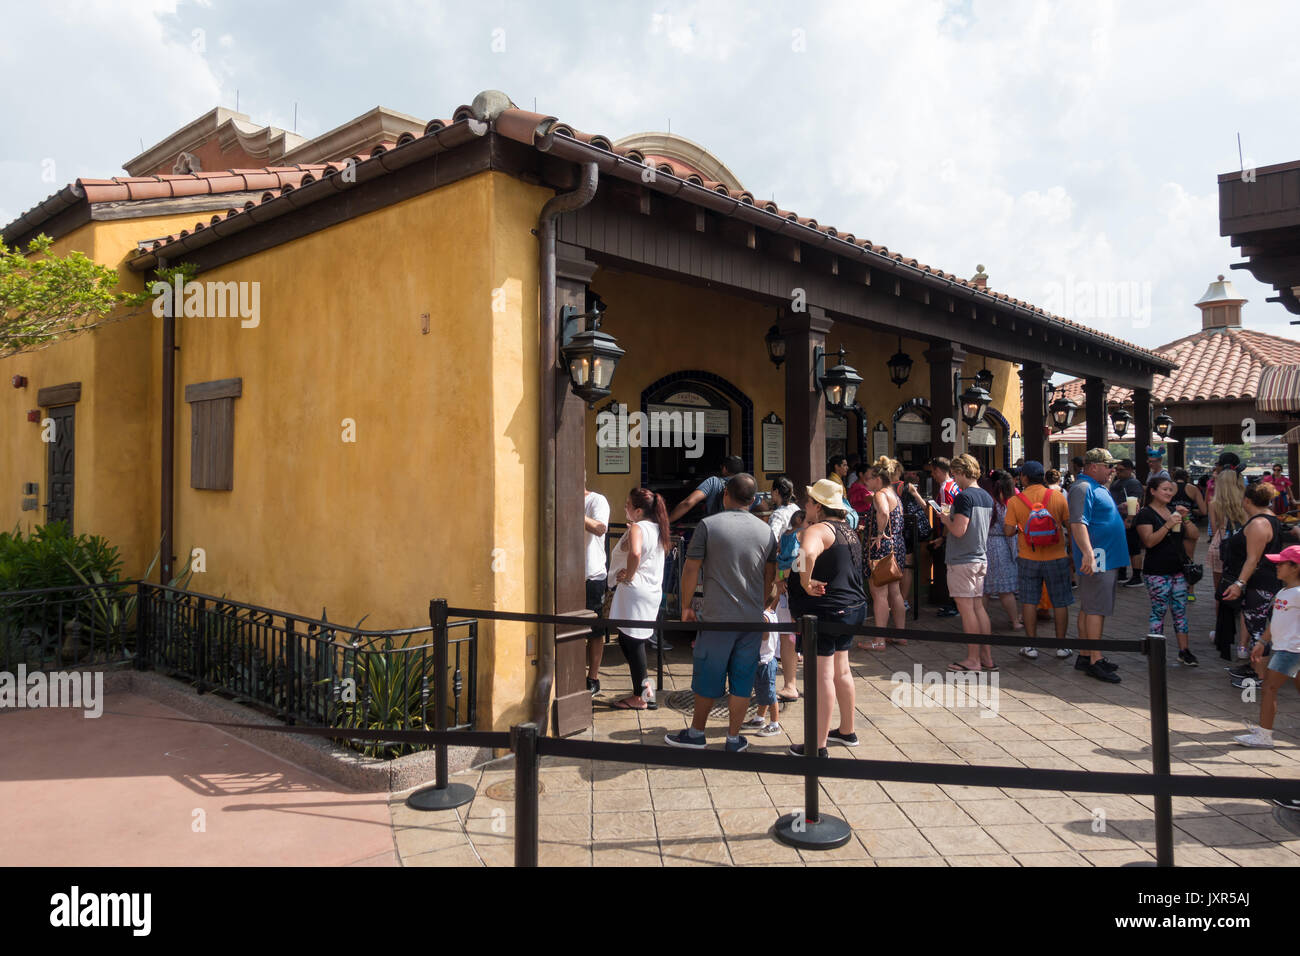 La Cantina de san angel dans epcot, Walt Disney World, Orlando, Floride. Banque D'Images